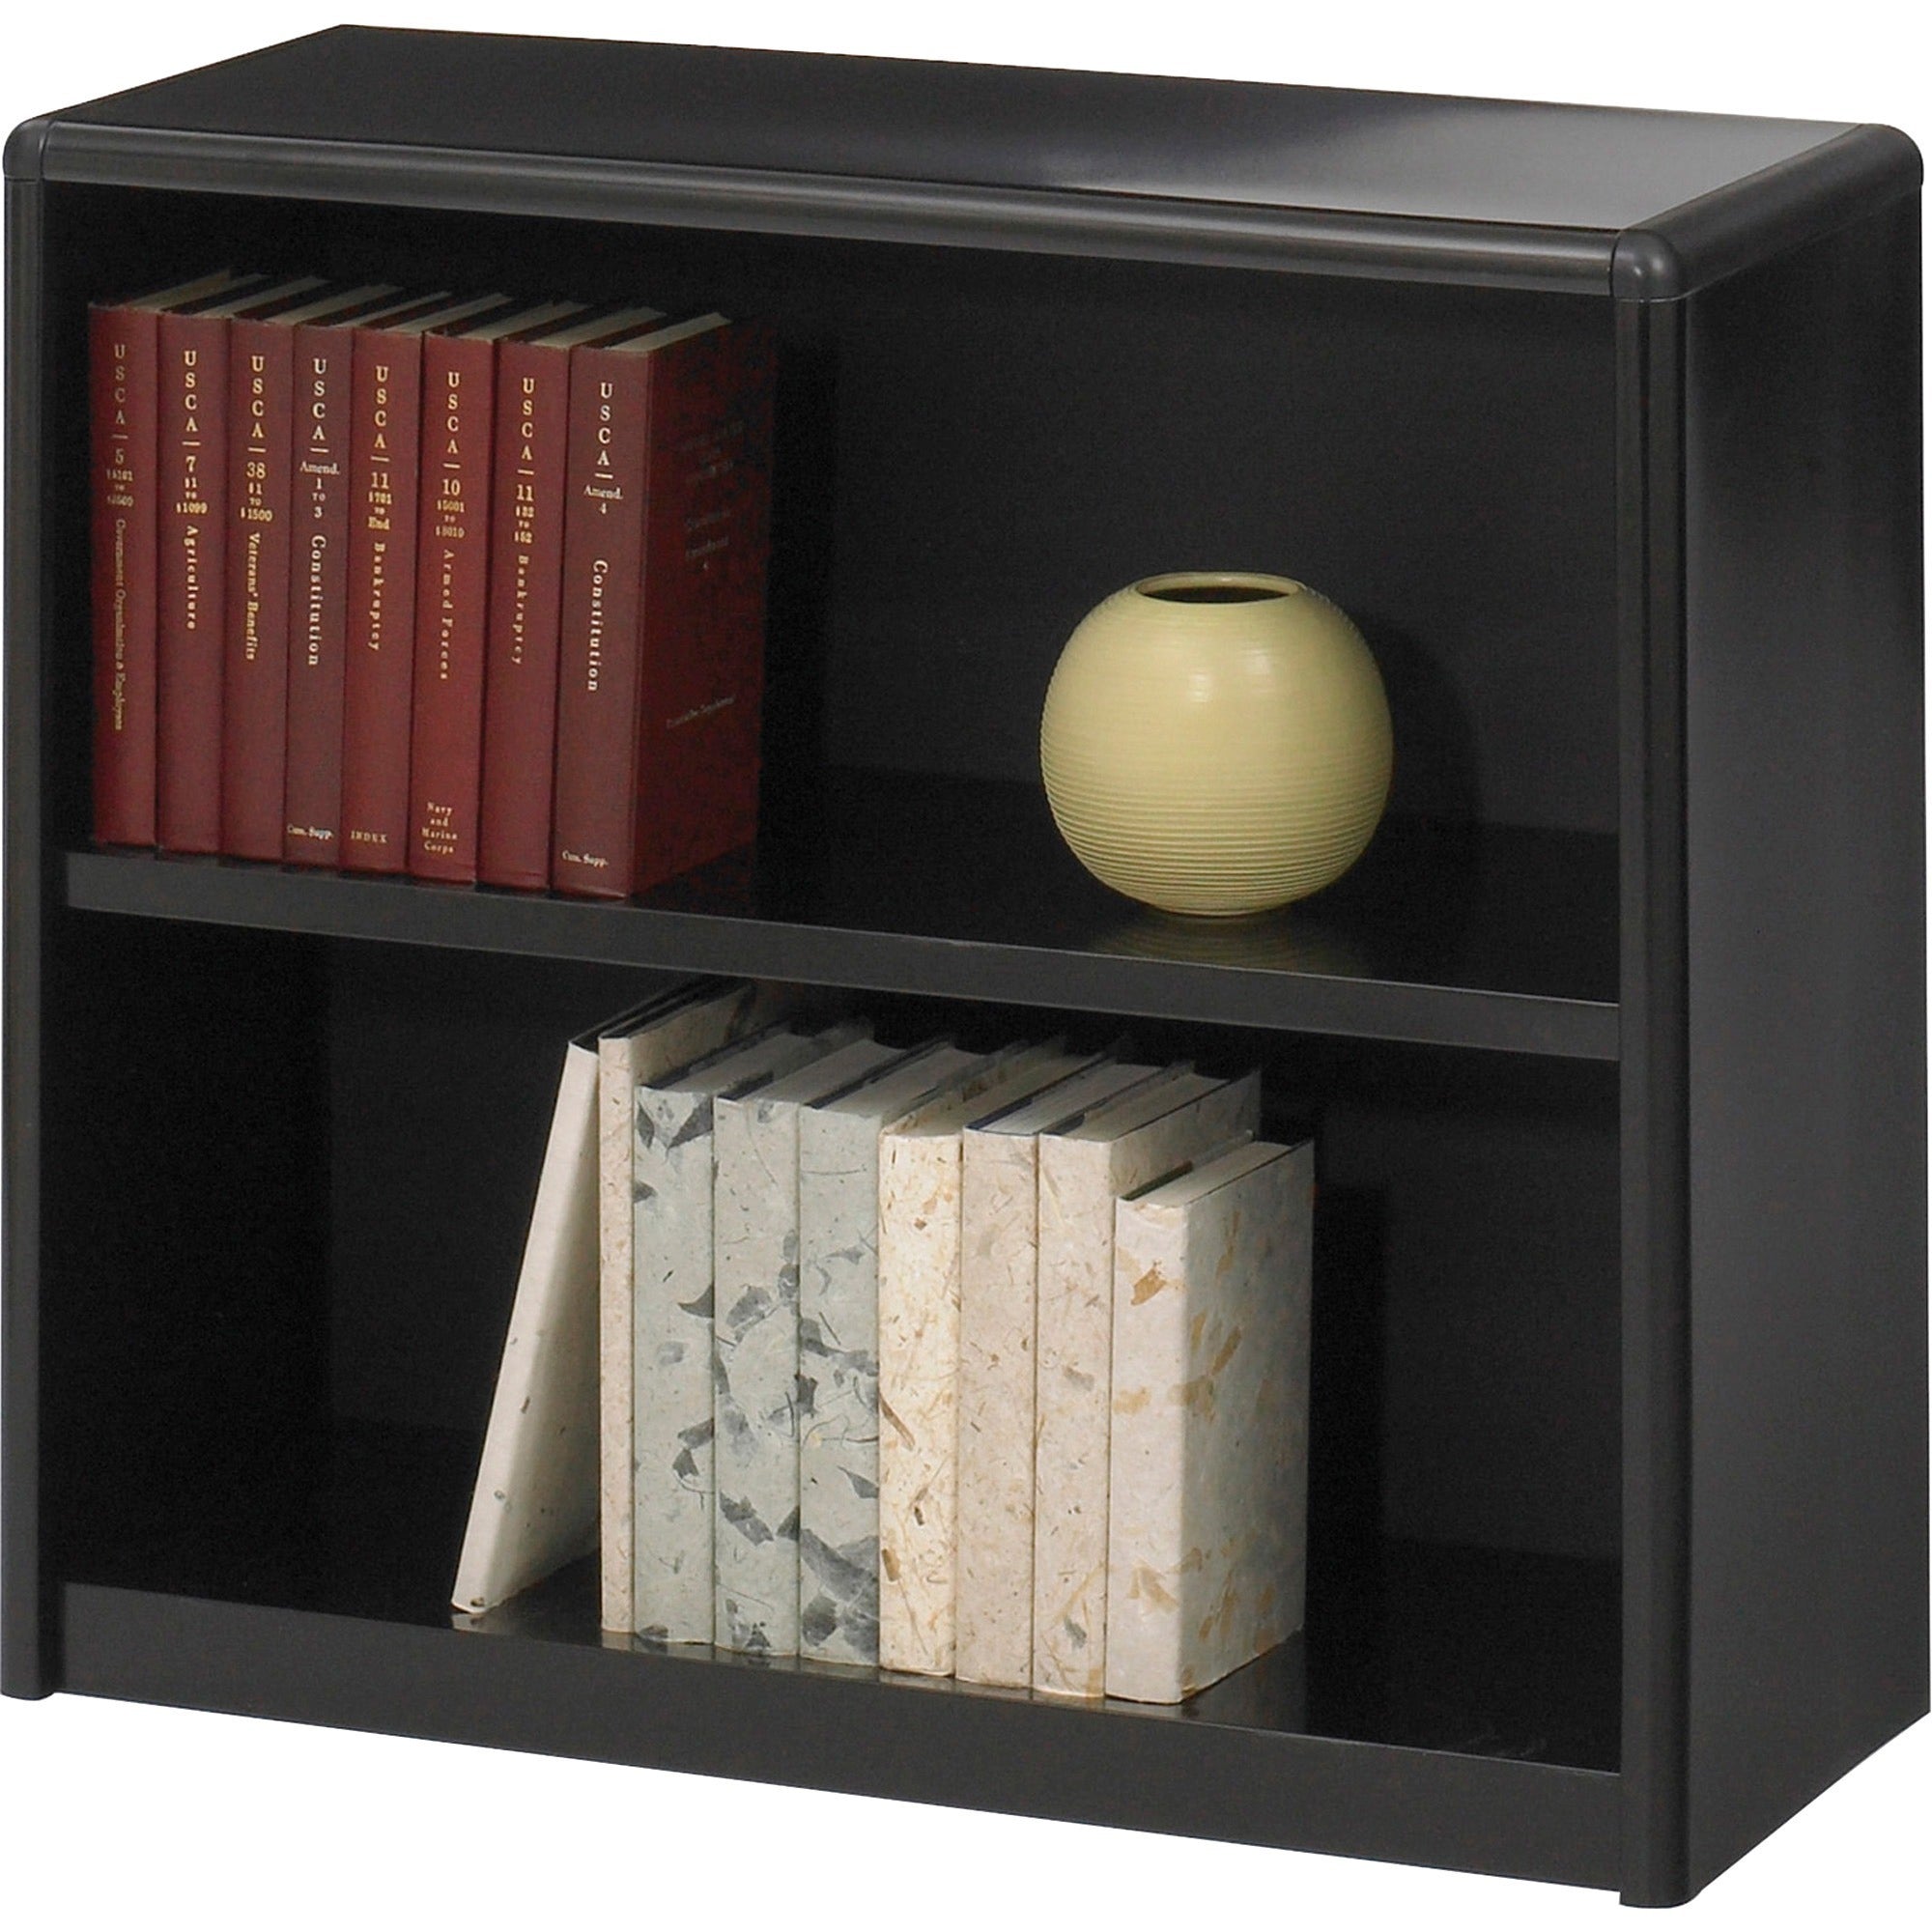 Safco ValueMate Bookcase - 31.8" x 13.5" x 28" - 2 x Shelf(ves) - Black - Steel, Fiberboard, Plastic - Assembly Required - 